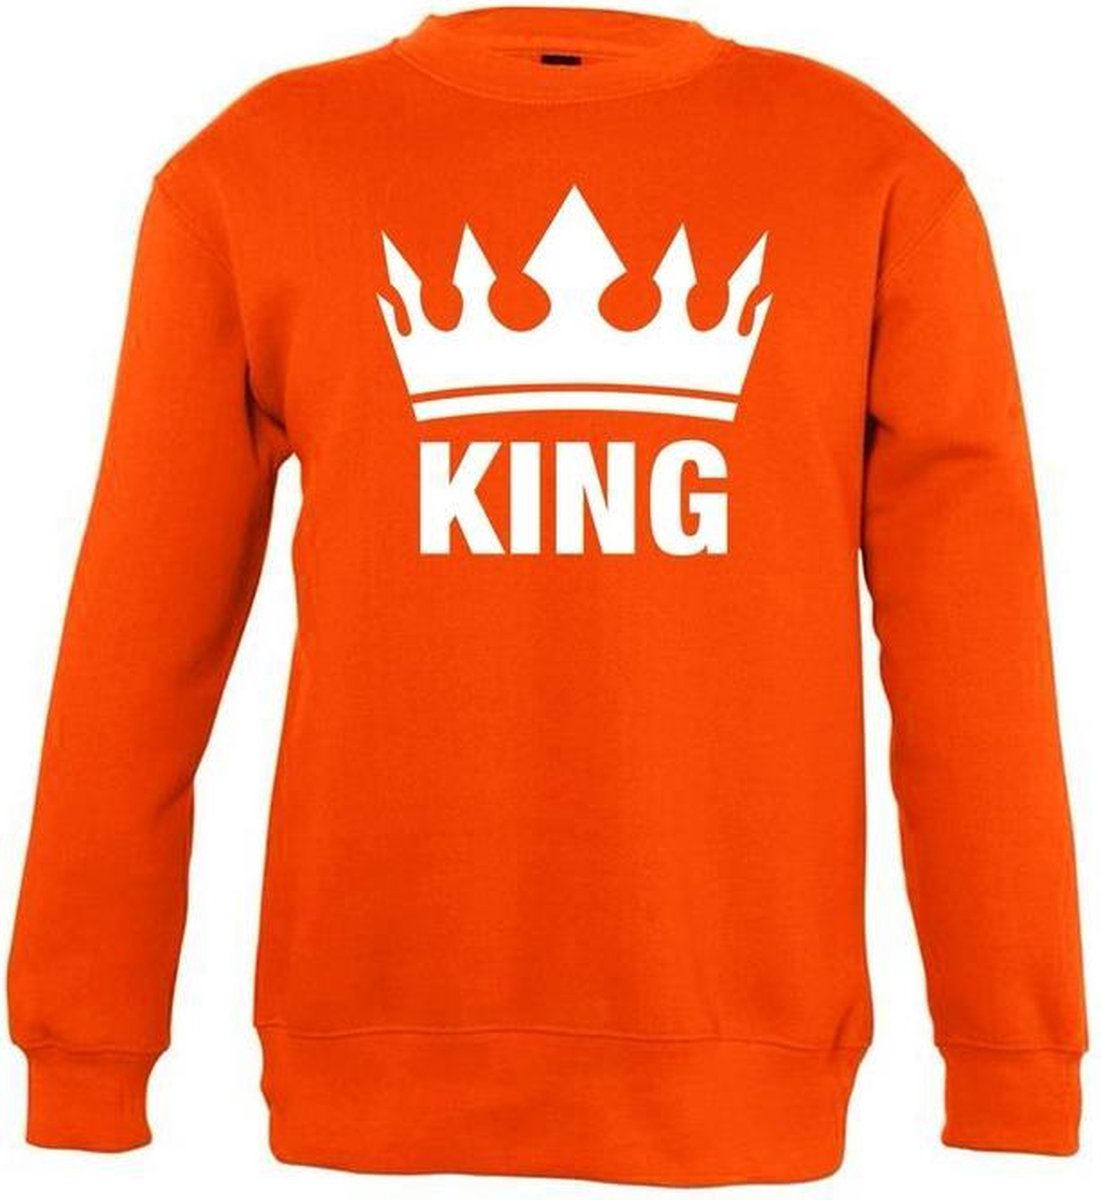 Oranje Koningsdag King sweater kinderen 7-8 jaar (122/128) - Shoppartners